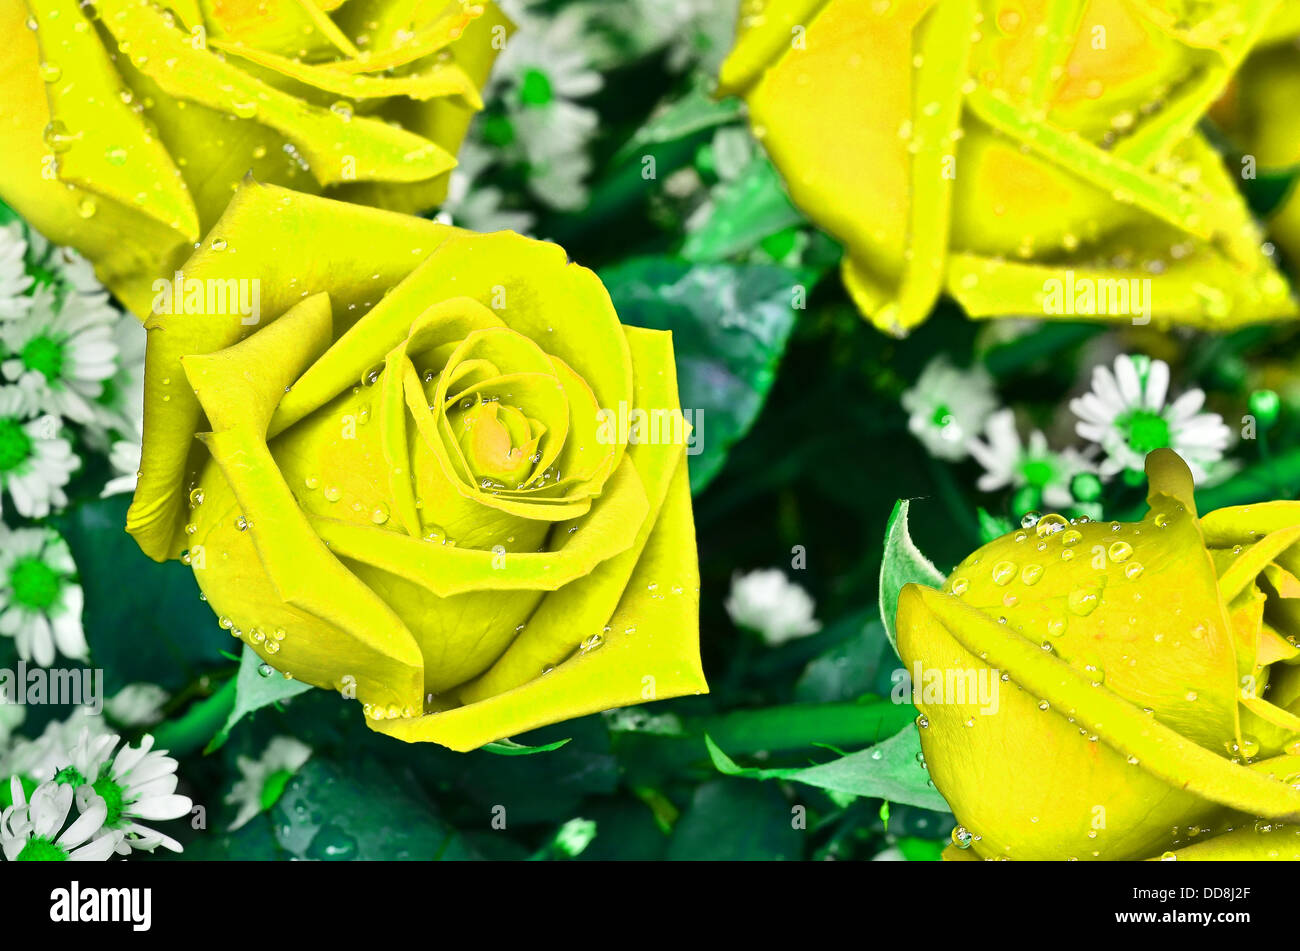 Close-up view of beatiful yellow rose Stock Photo